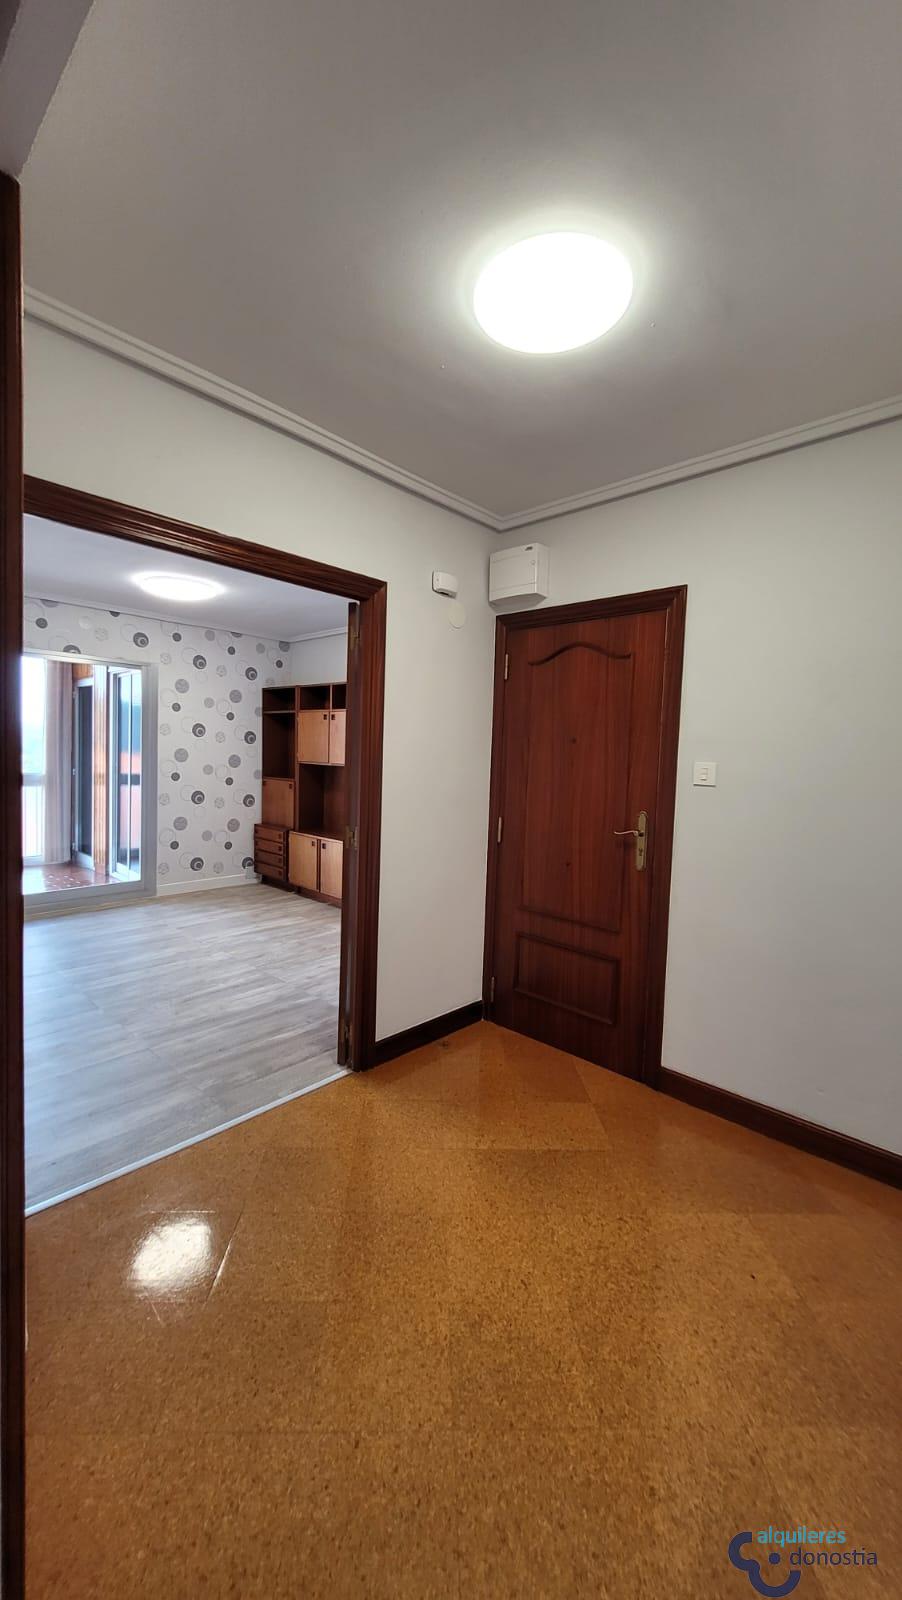 For rent of flat in Lasarte-Oria